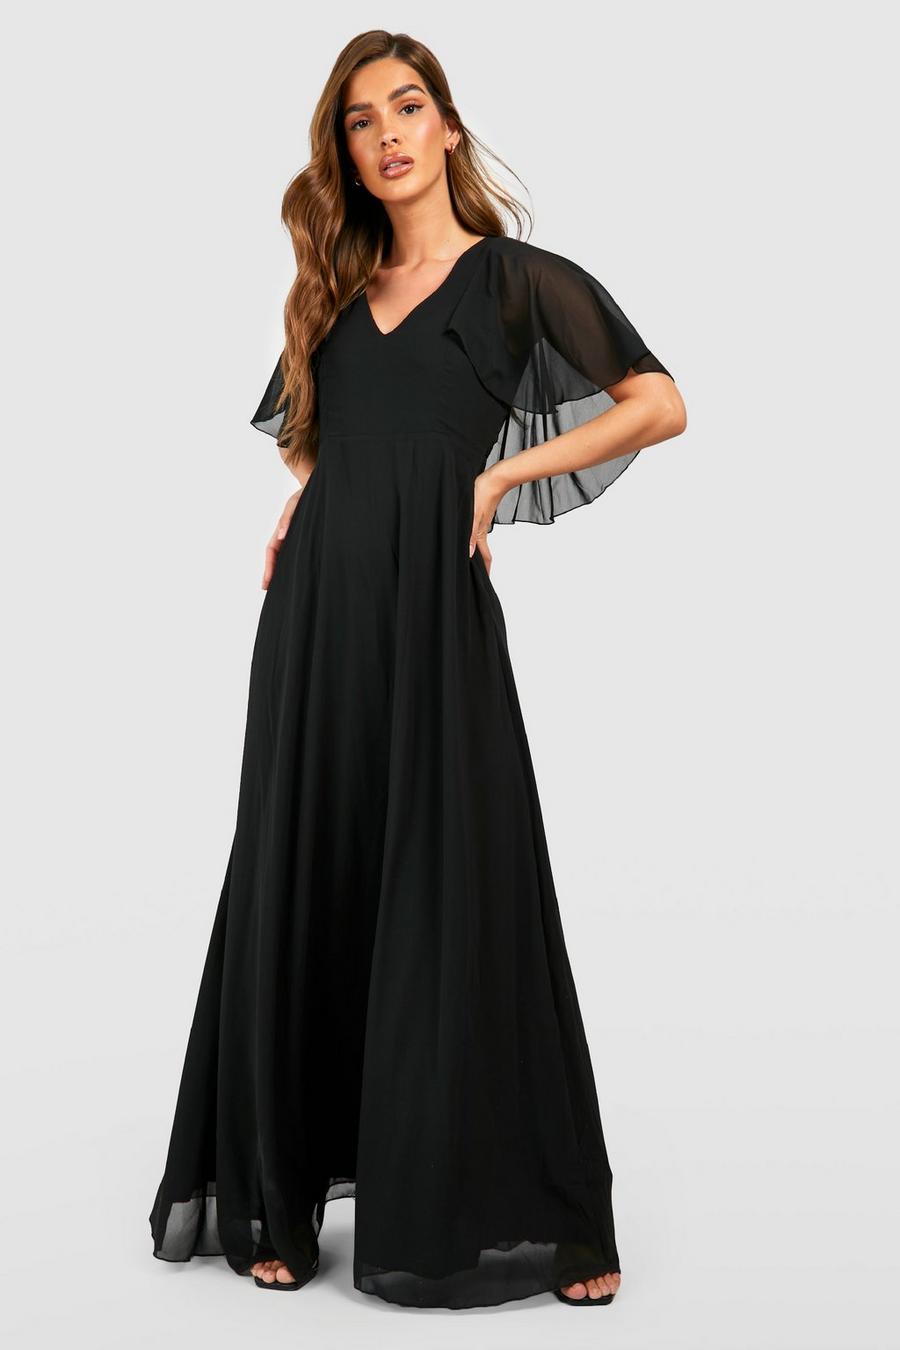 Black Chiffon Cape Sleeve Maxi Bridesmaid Dress